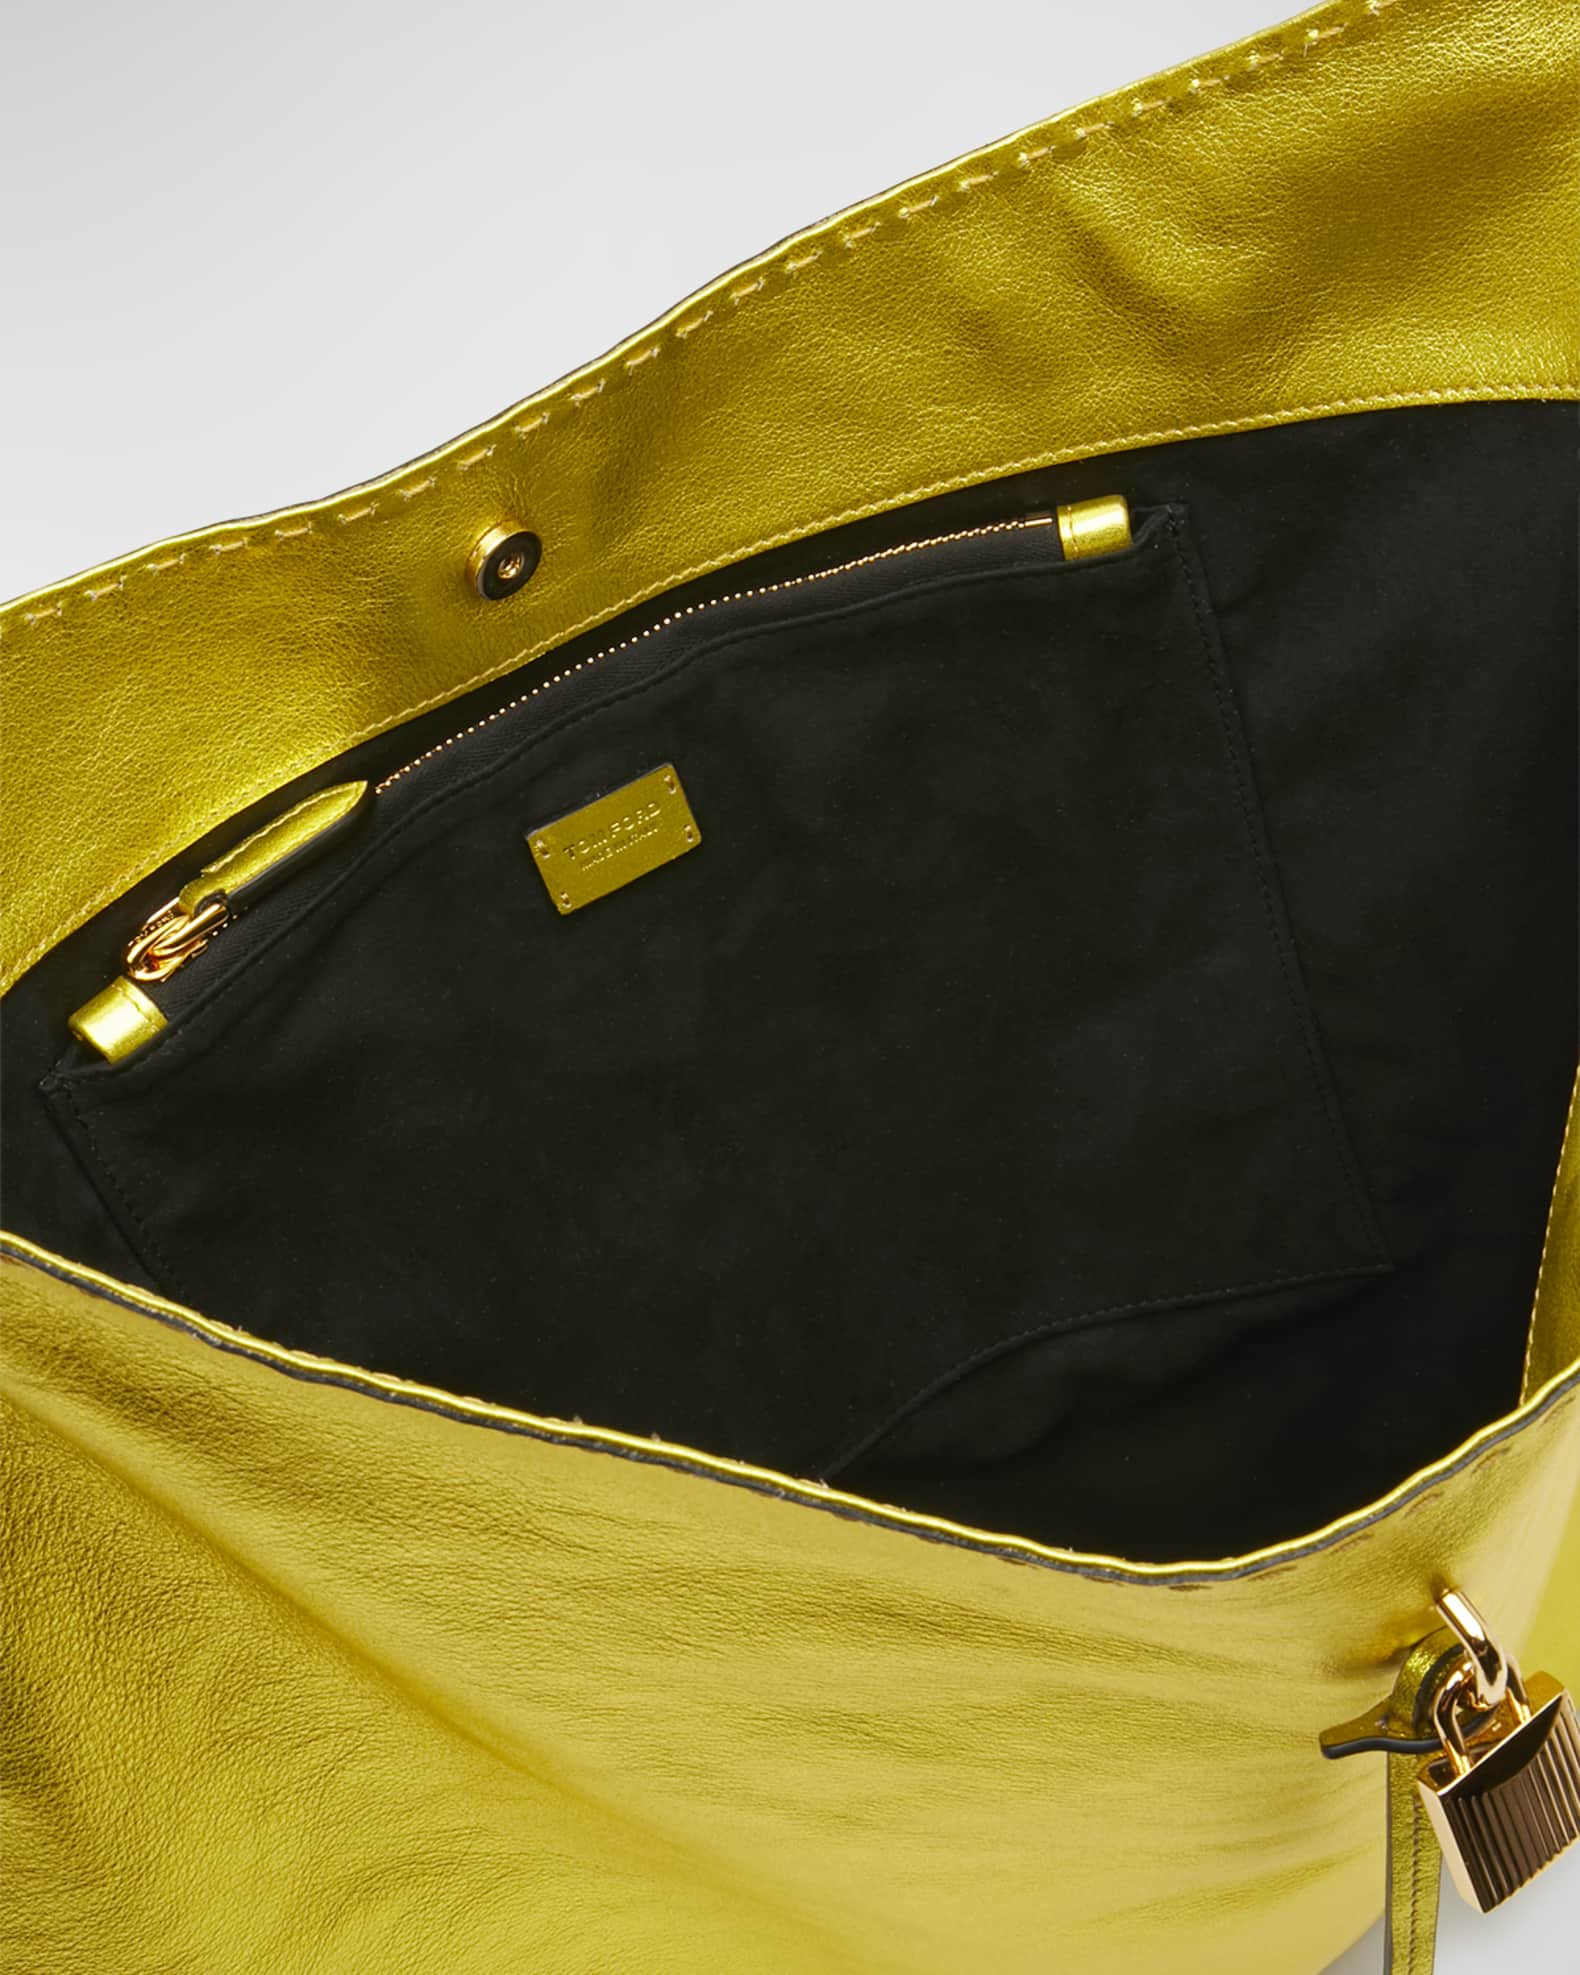 TOM FORD Large Metallic Leather Shoulder Bag | Neiman Marcus